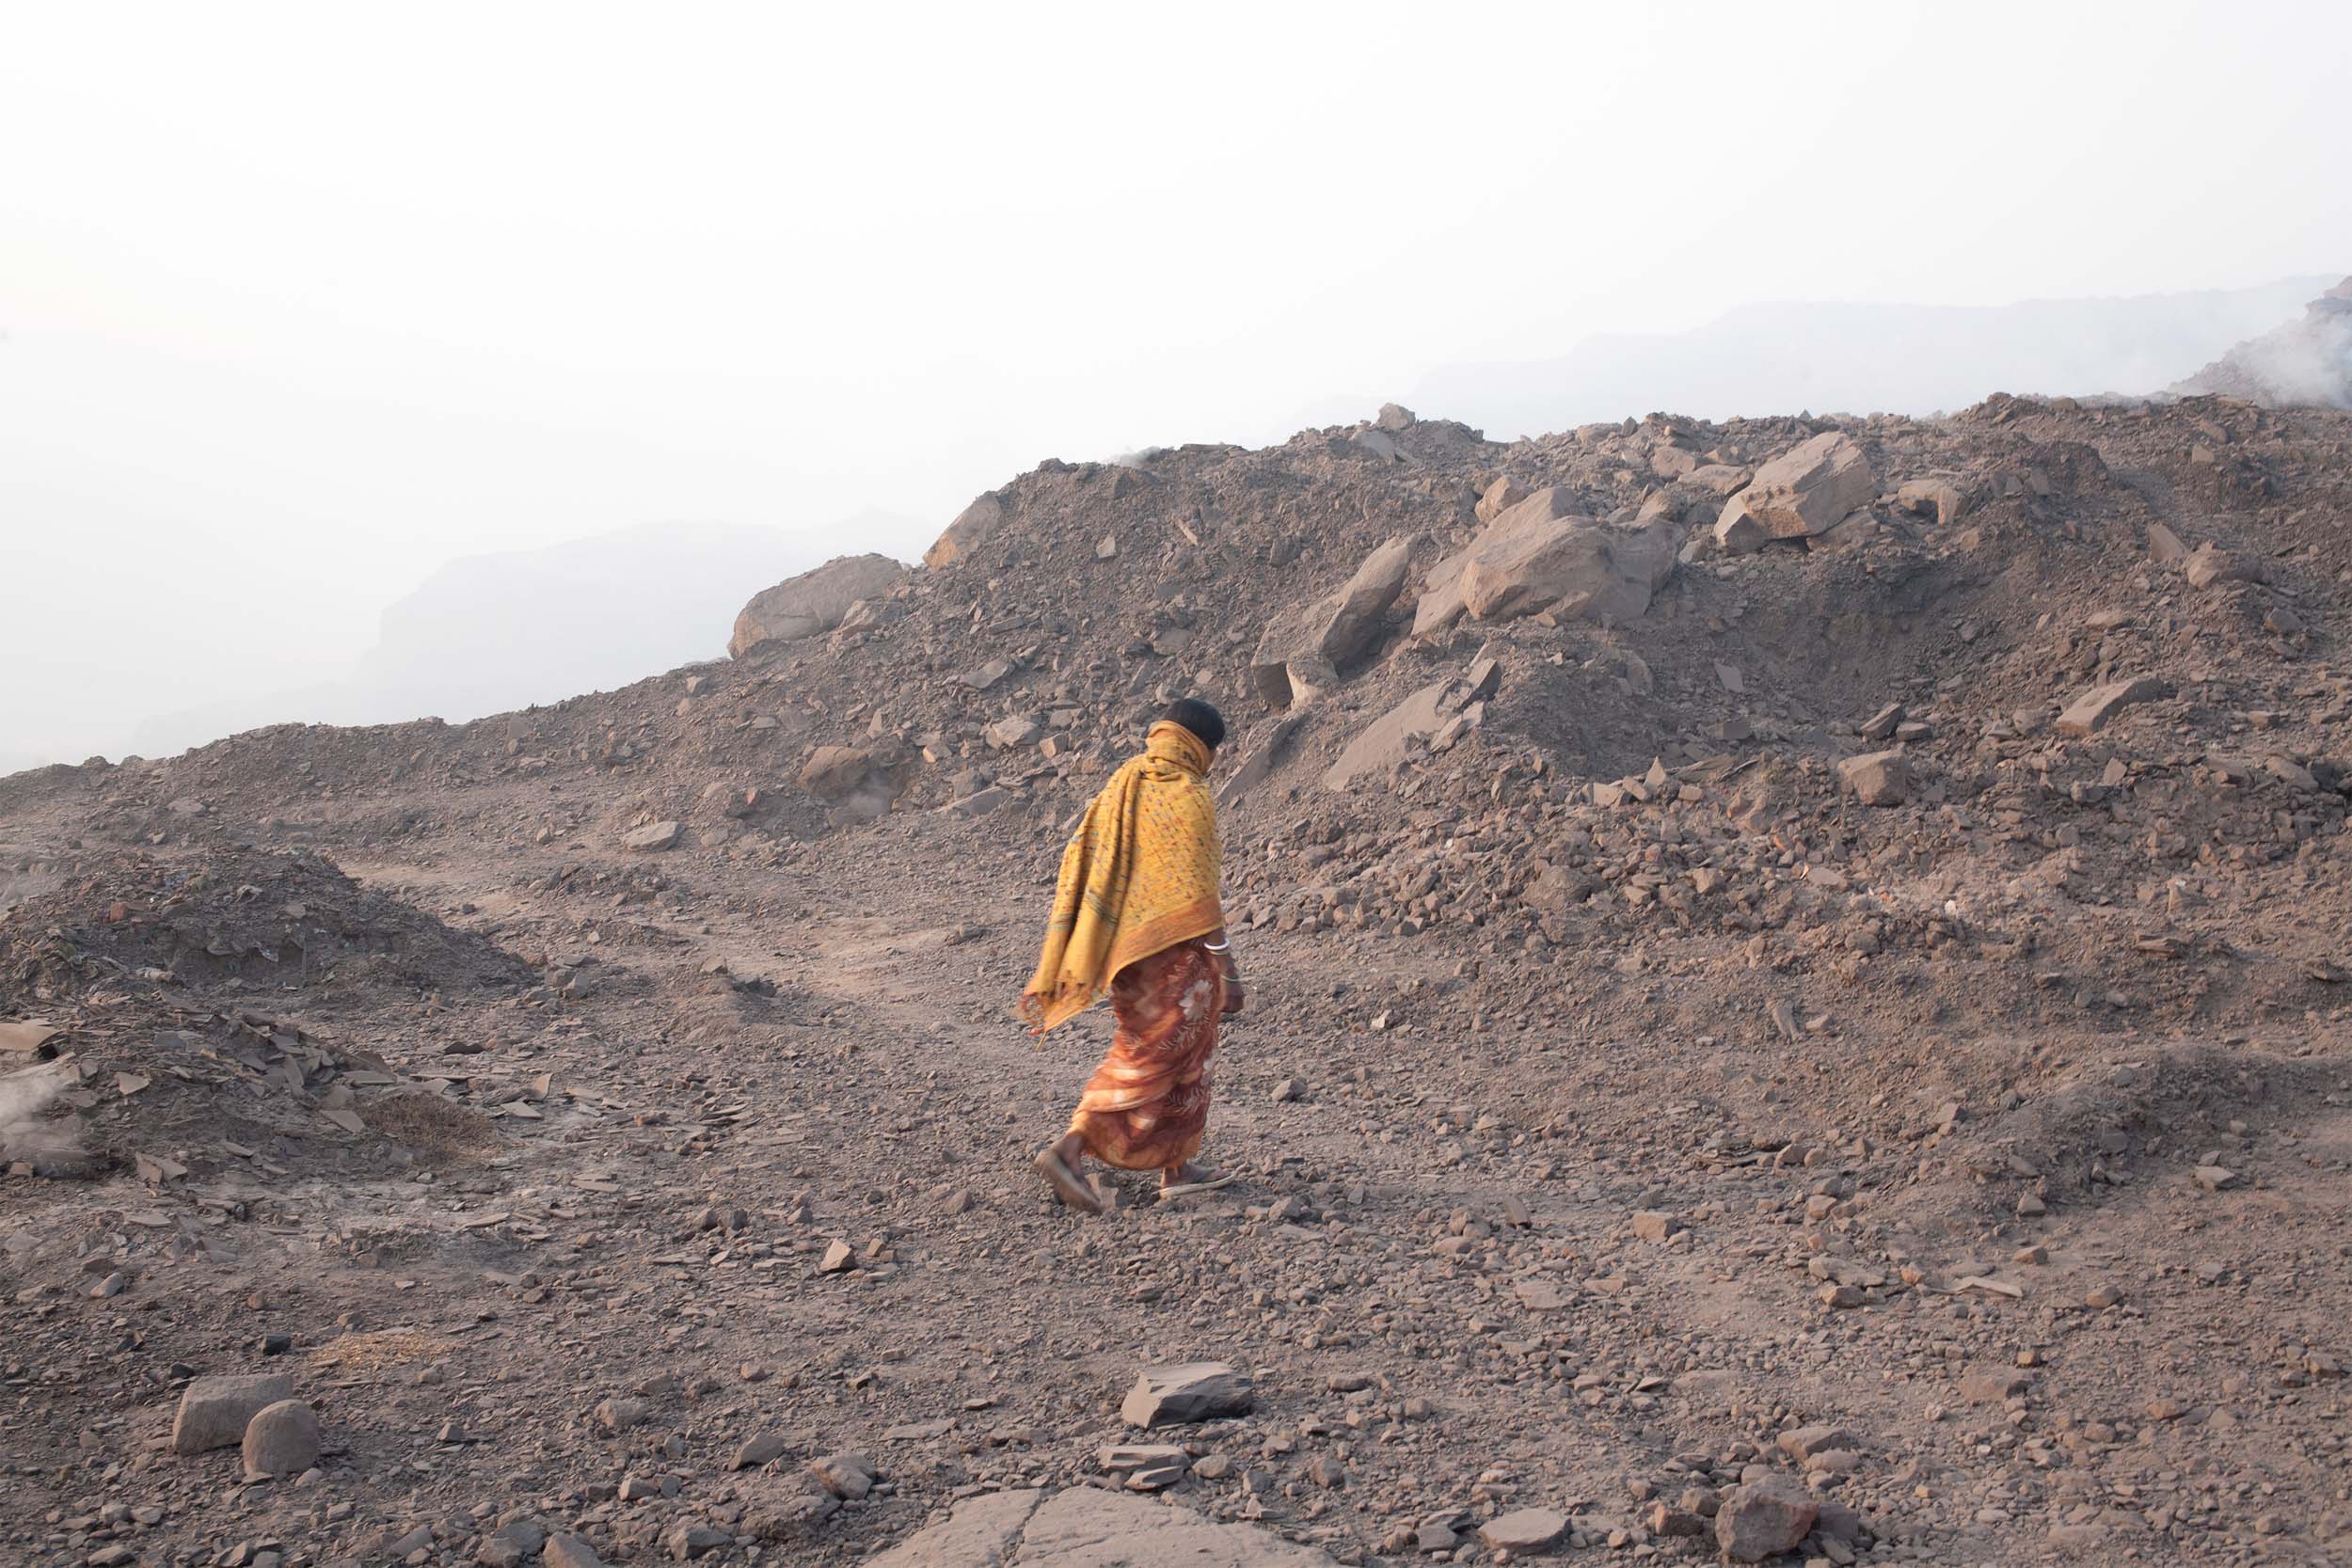 17_freelance photographer_new delhi_india_srinivas kuruganti_coal mining_dhanbad.jpg